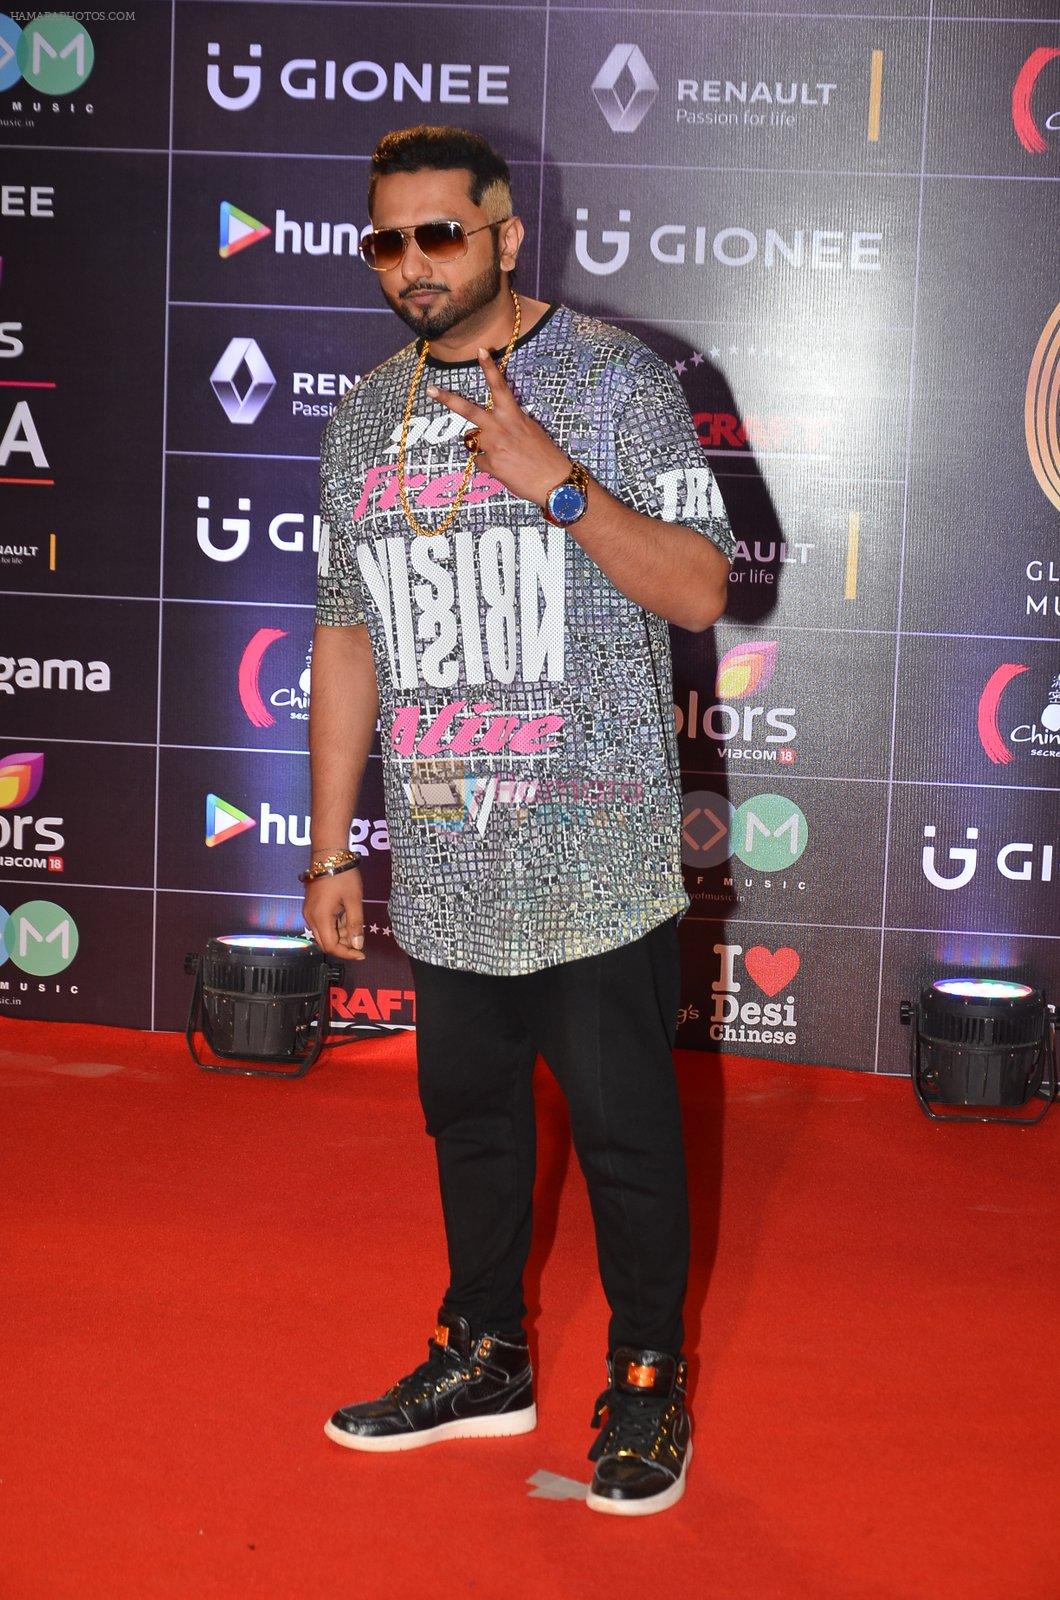 Honey Singh at GIMA Awards 2016 on 6th April 2016